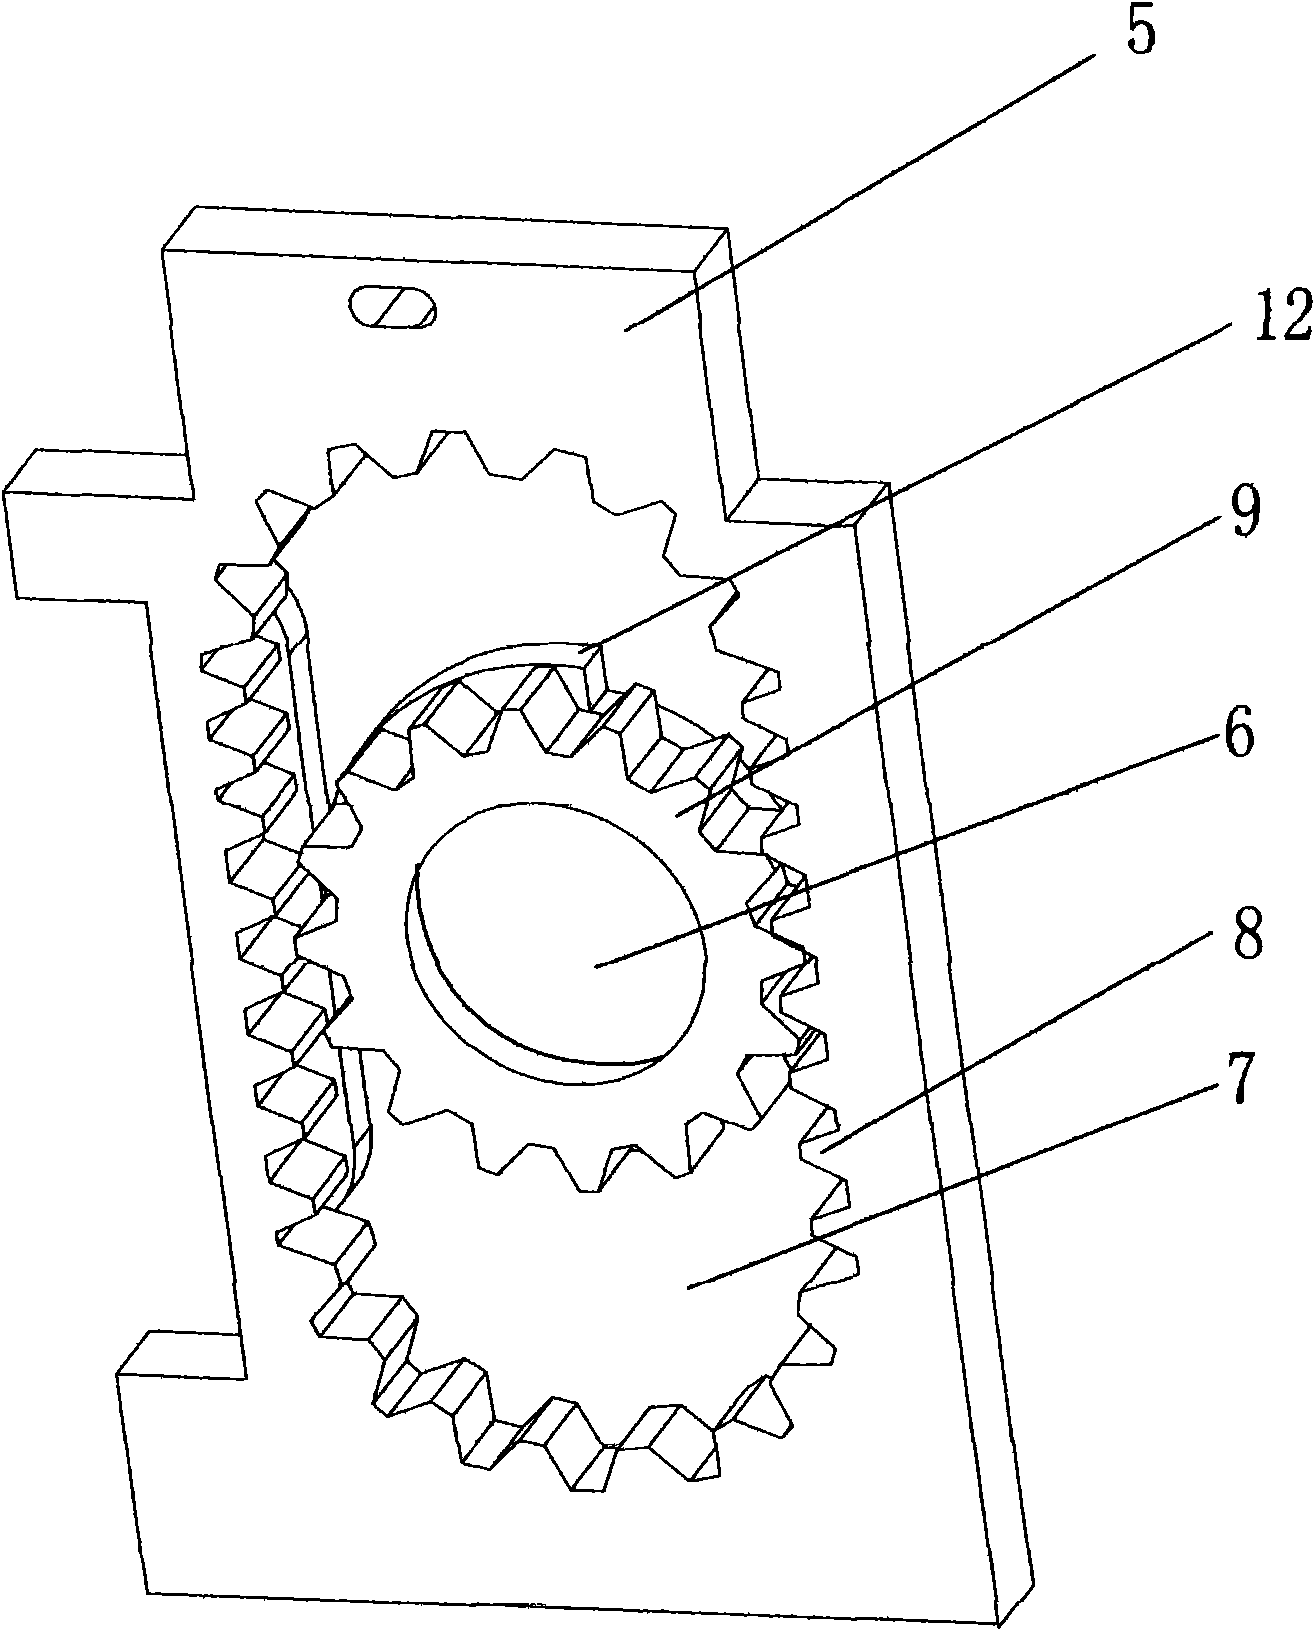 Straight-shaft engine